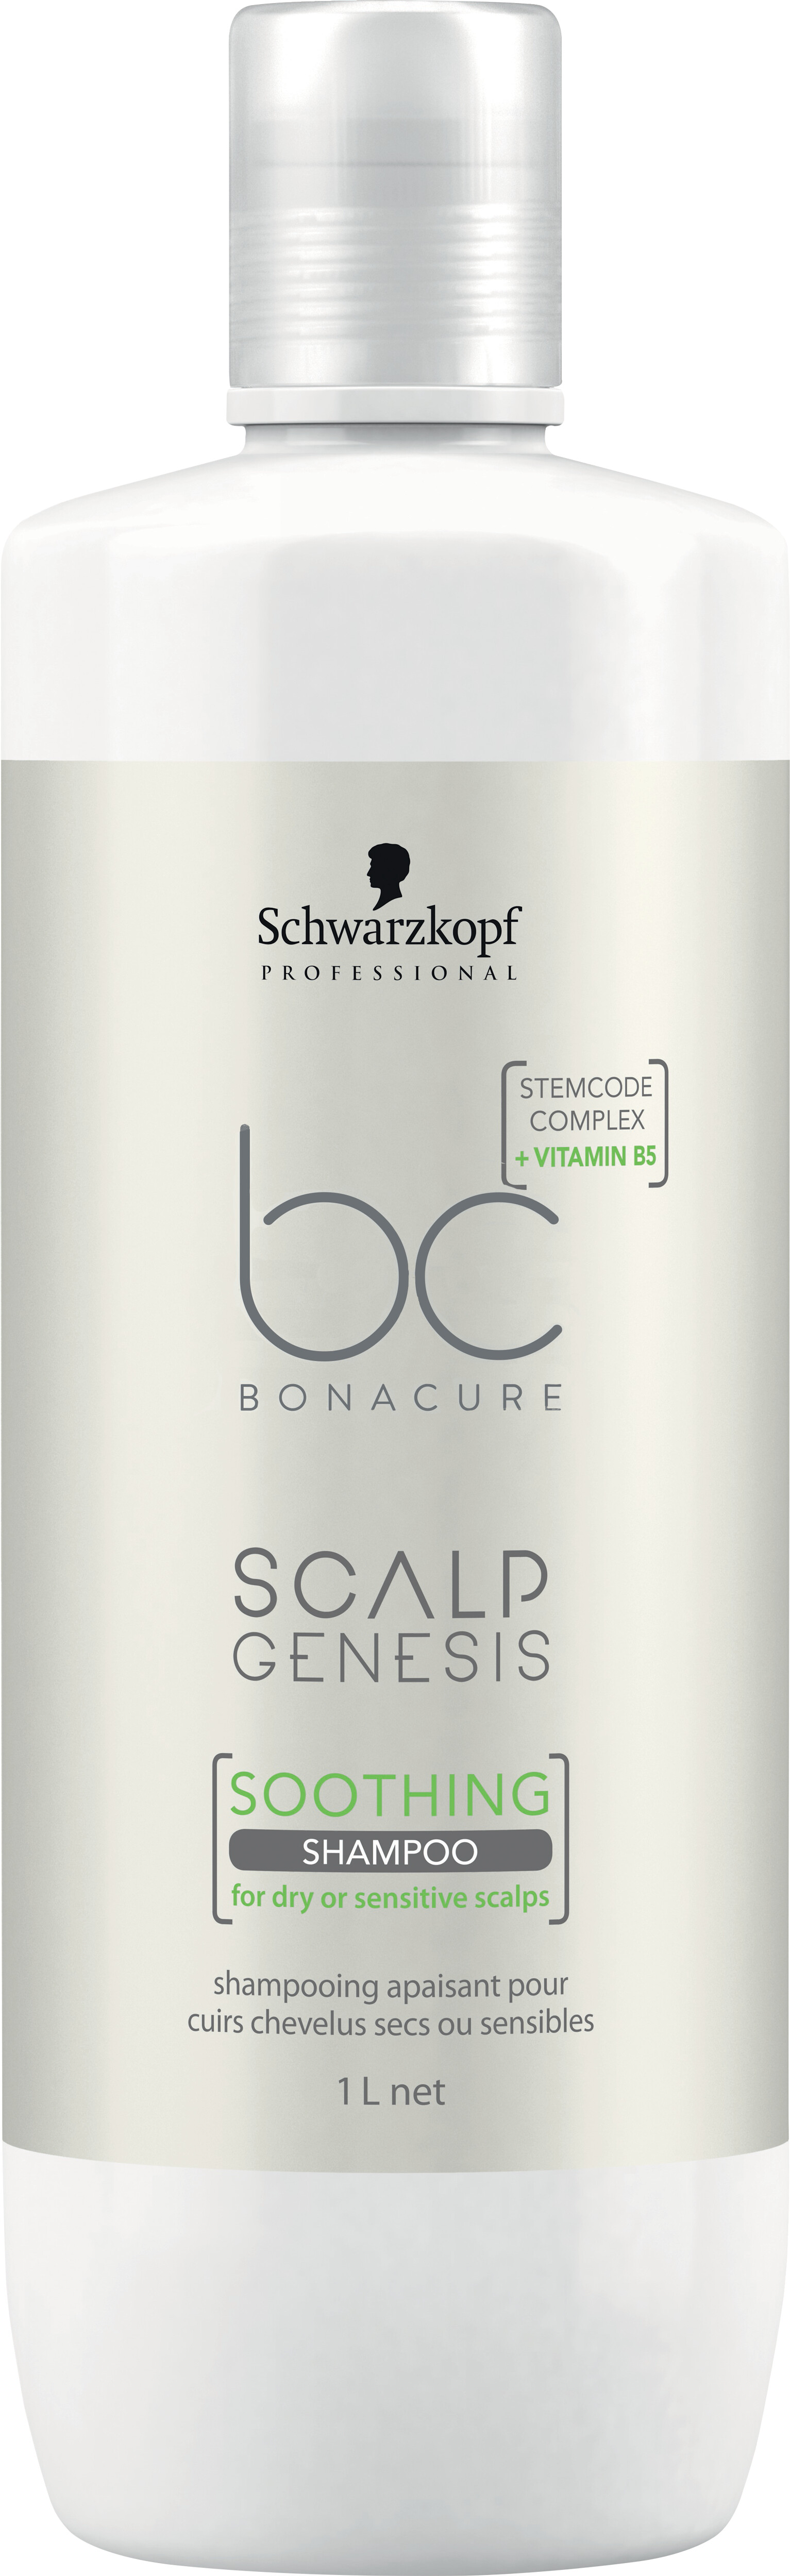 Schwarzkopf Professional BC Bonacure Scalp Genesis Soothing Shampoo 1 litre